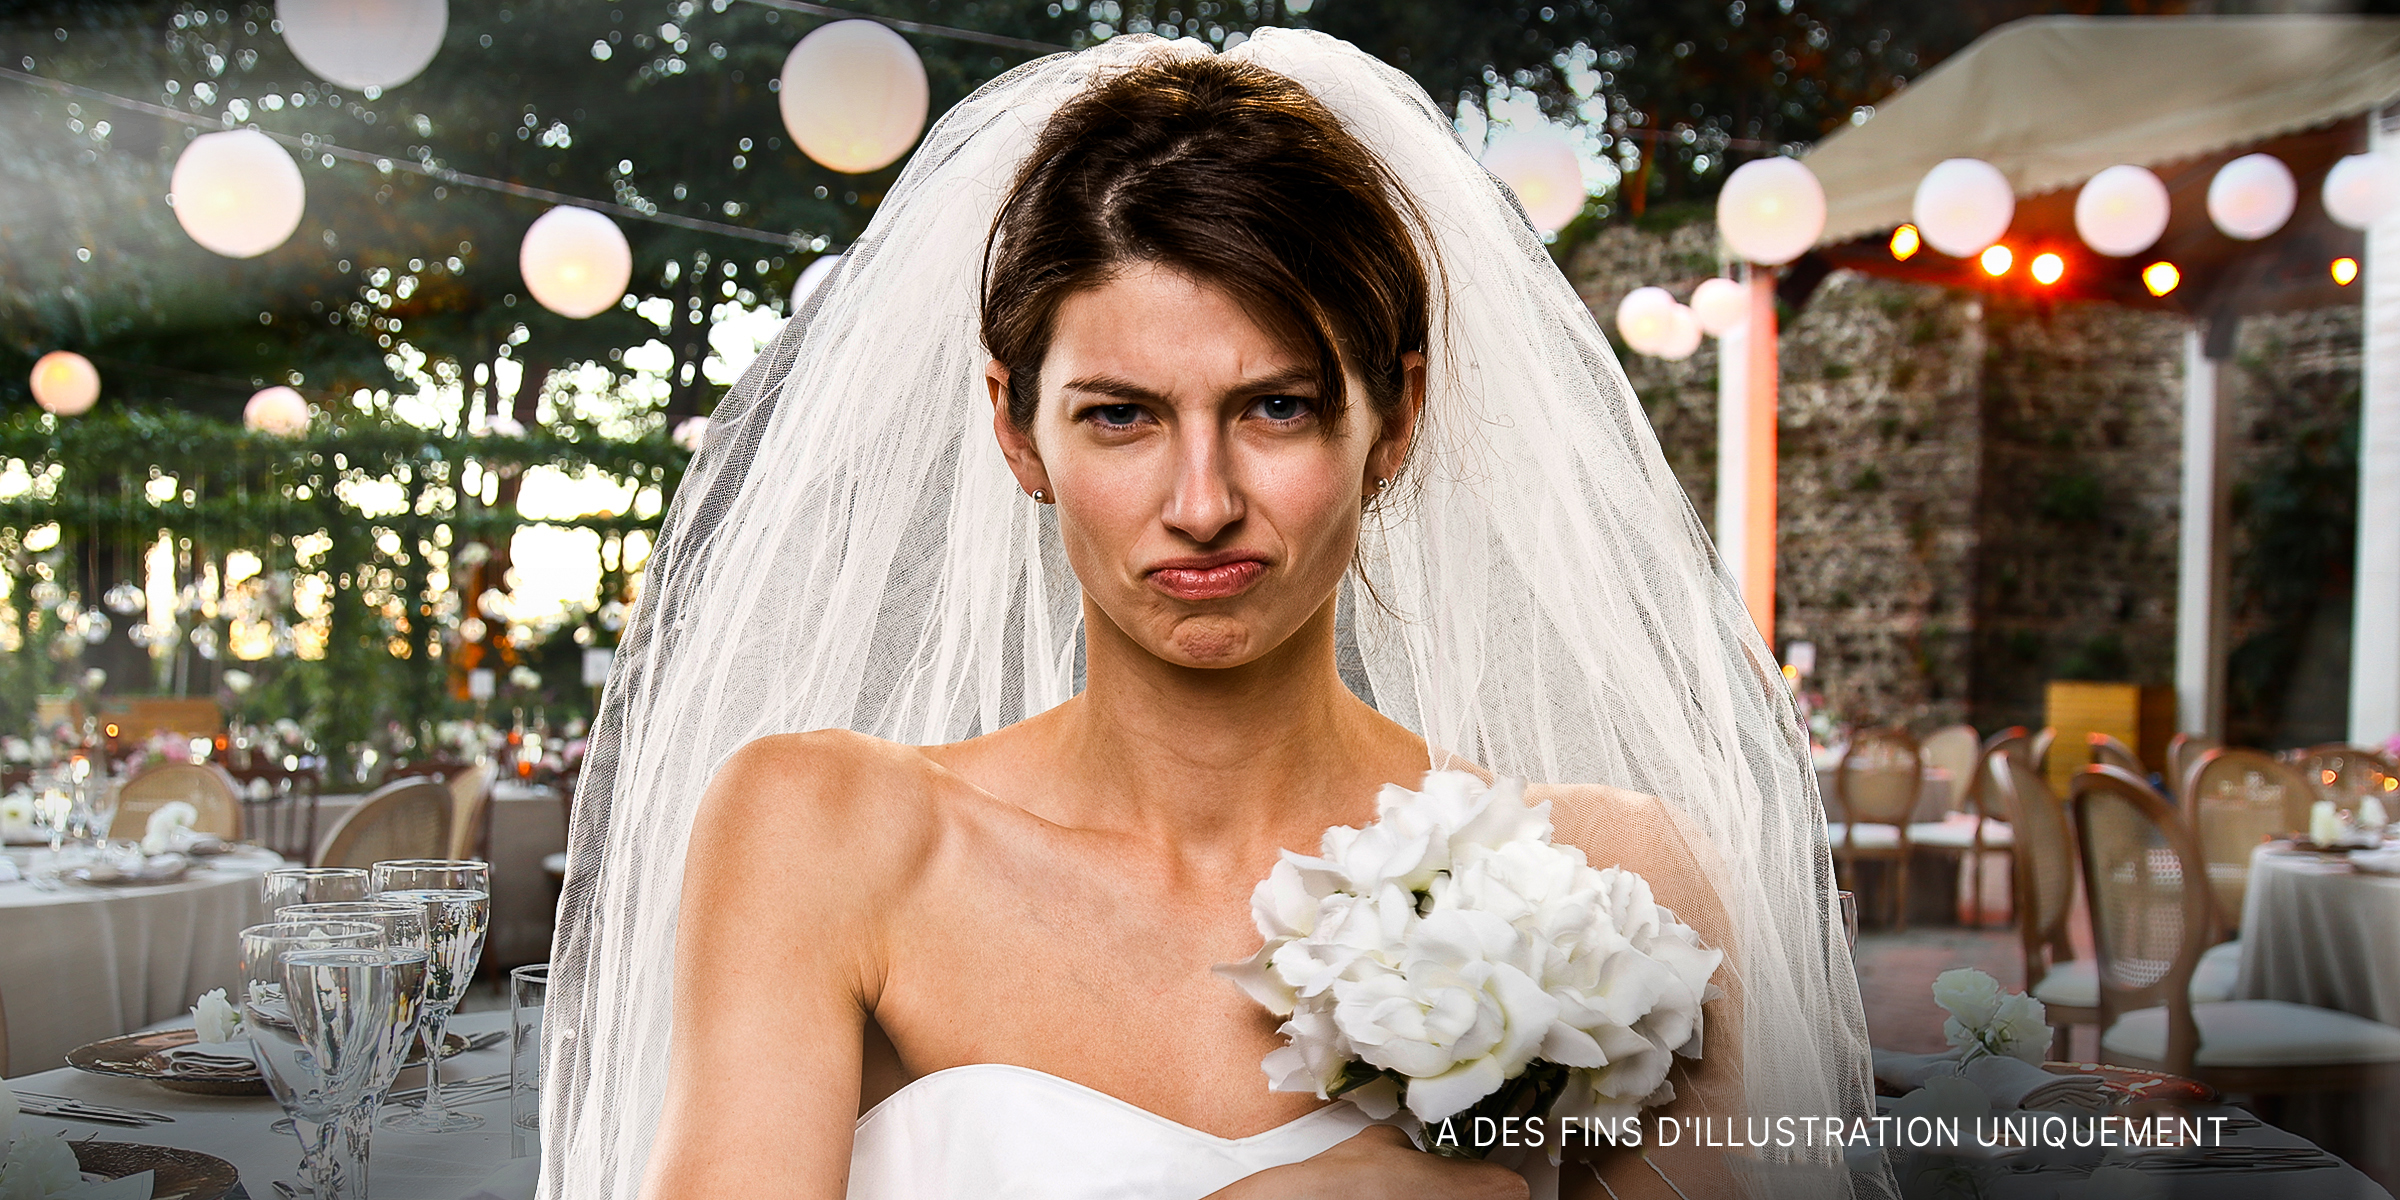 Une mariée bouleversée | Source : Shutterstock